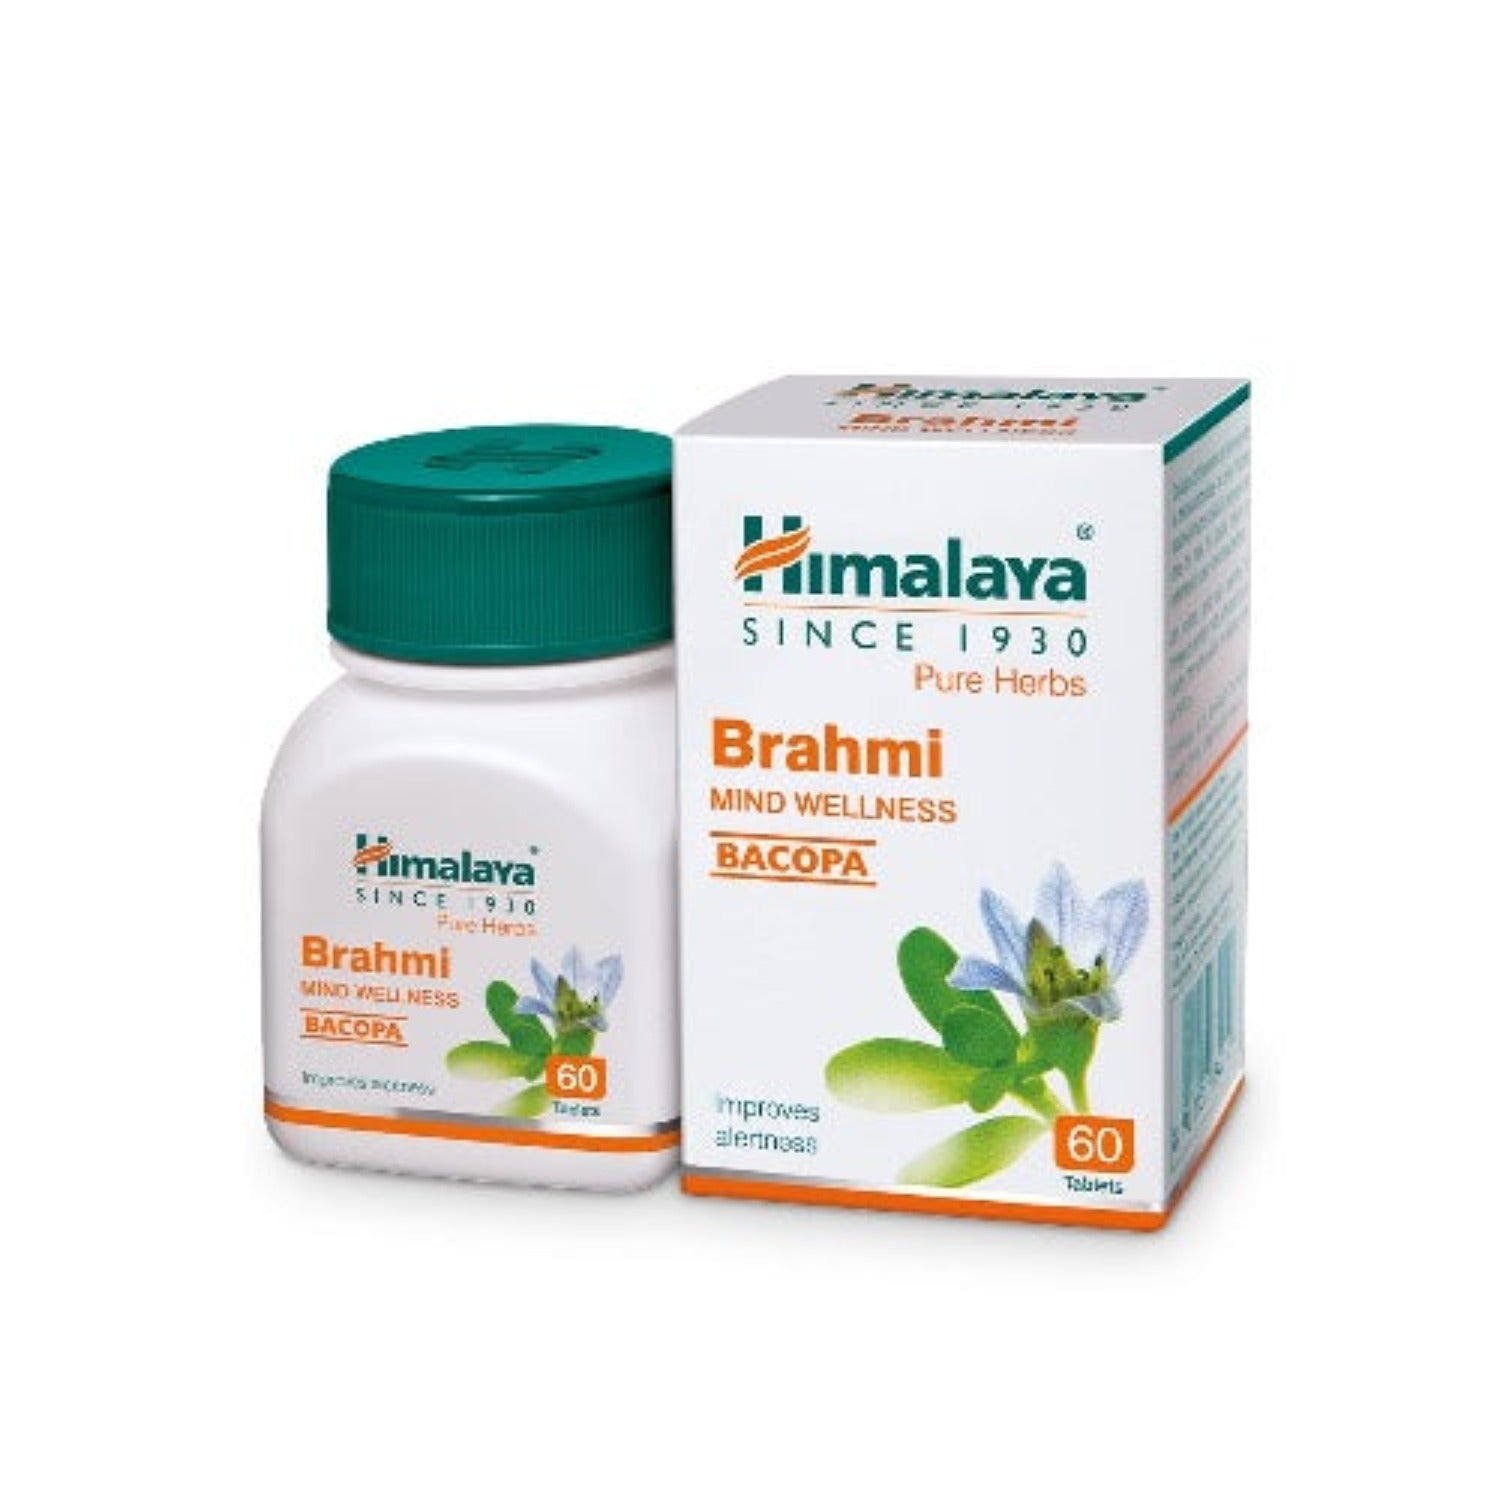 Himalaya Pure Herbs Mind Wellness Herbal Ayurvedic Brahmi Improves Alertness 60 Tablets